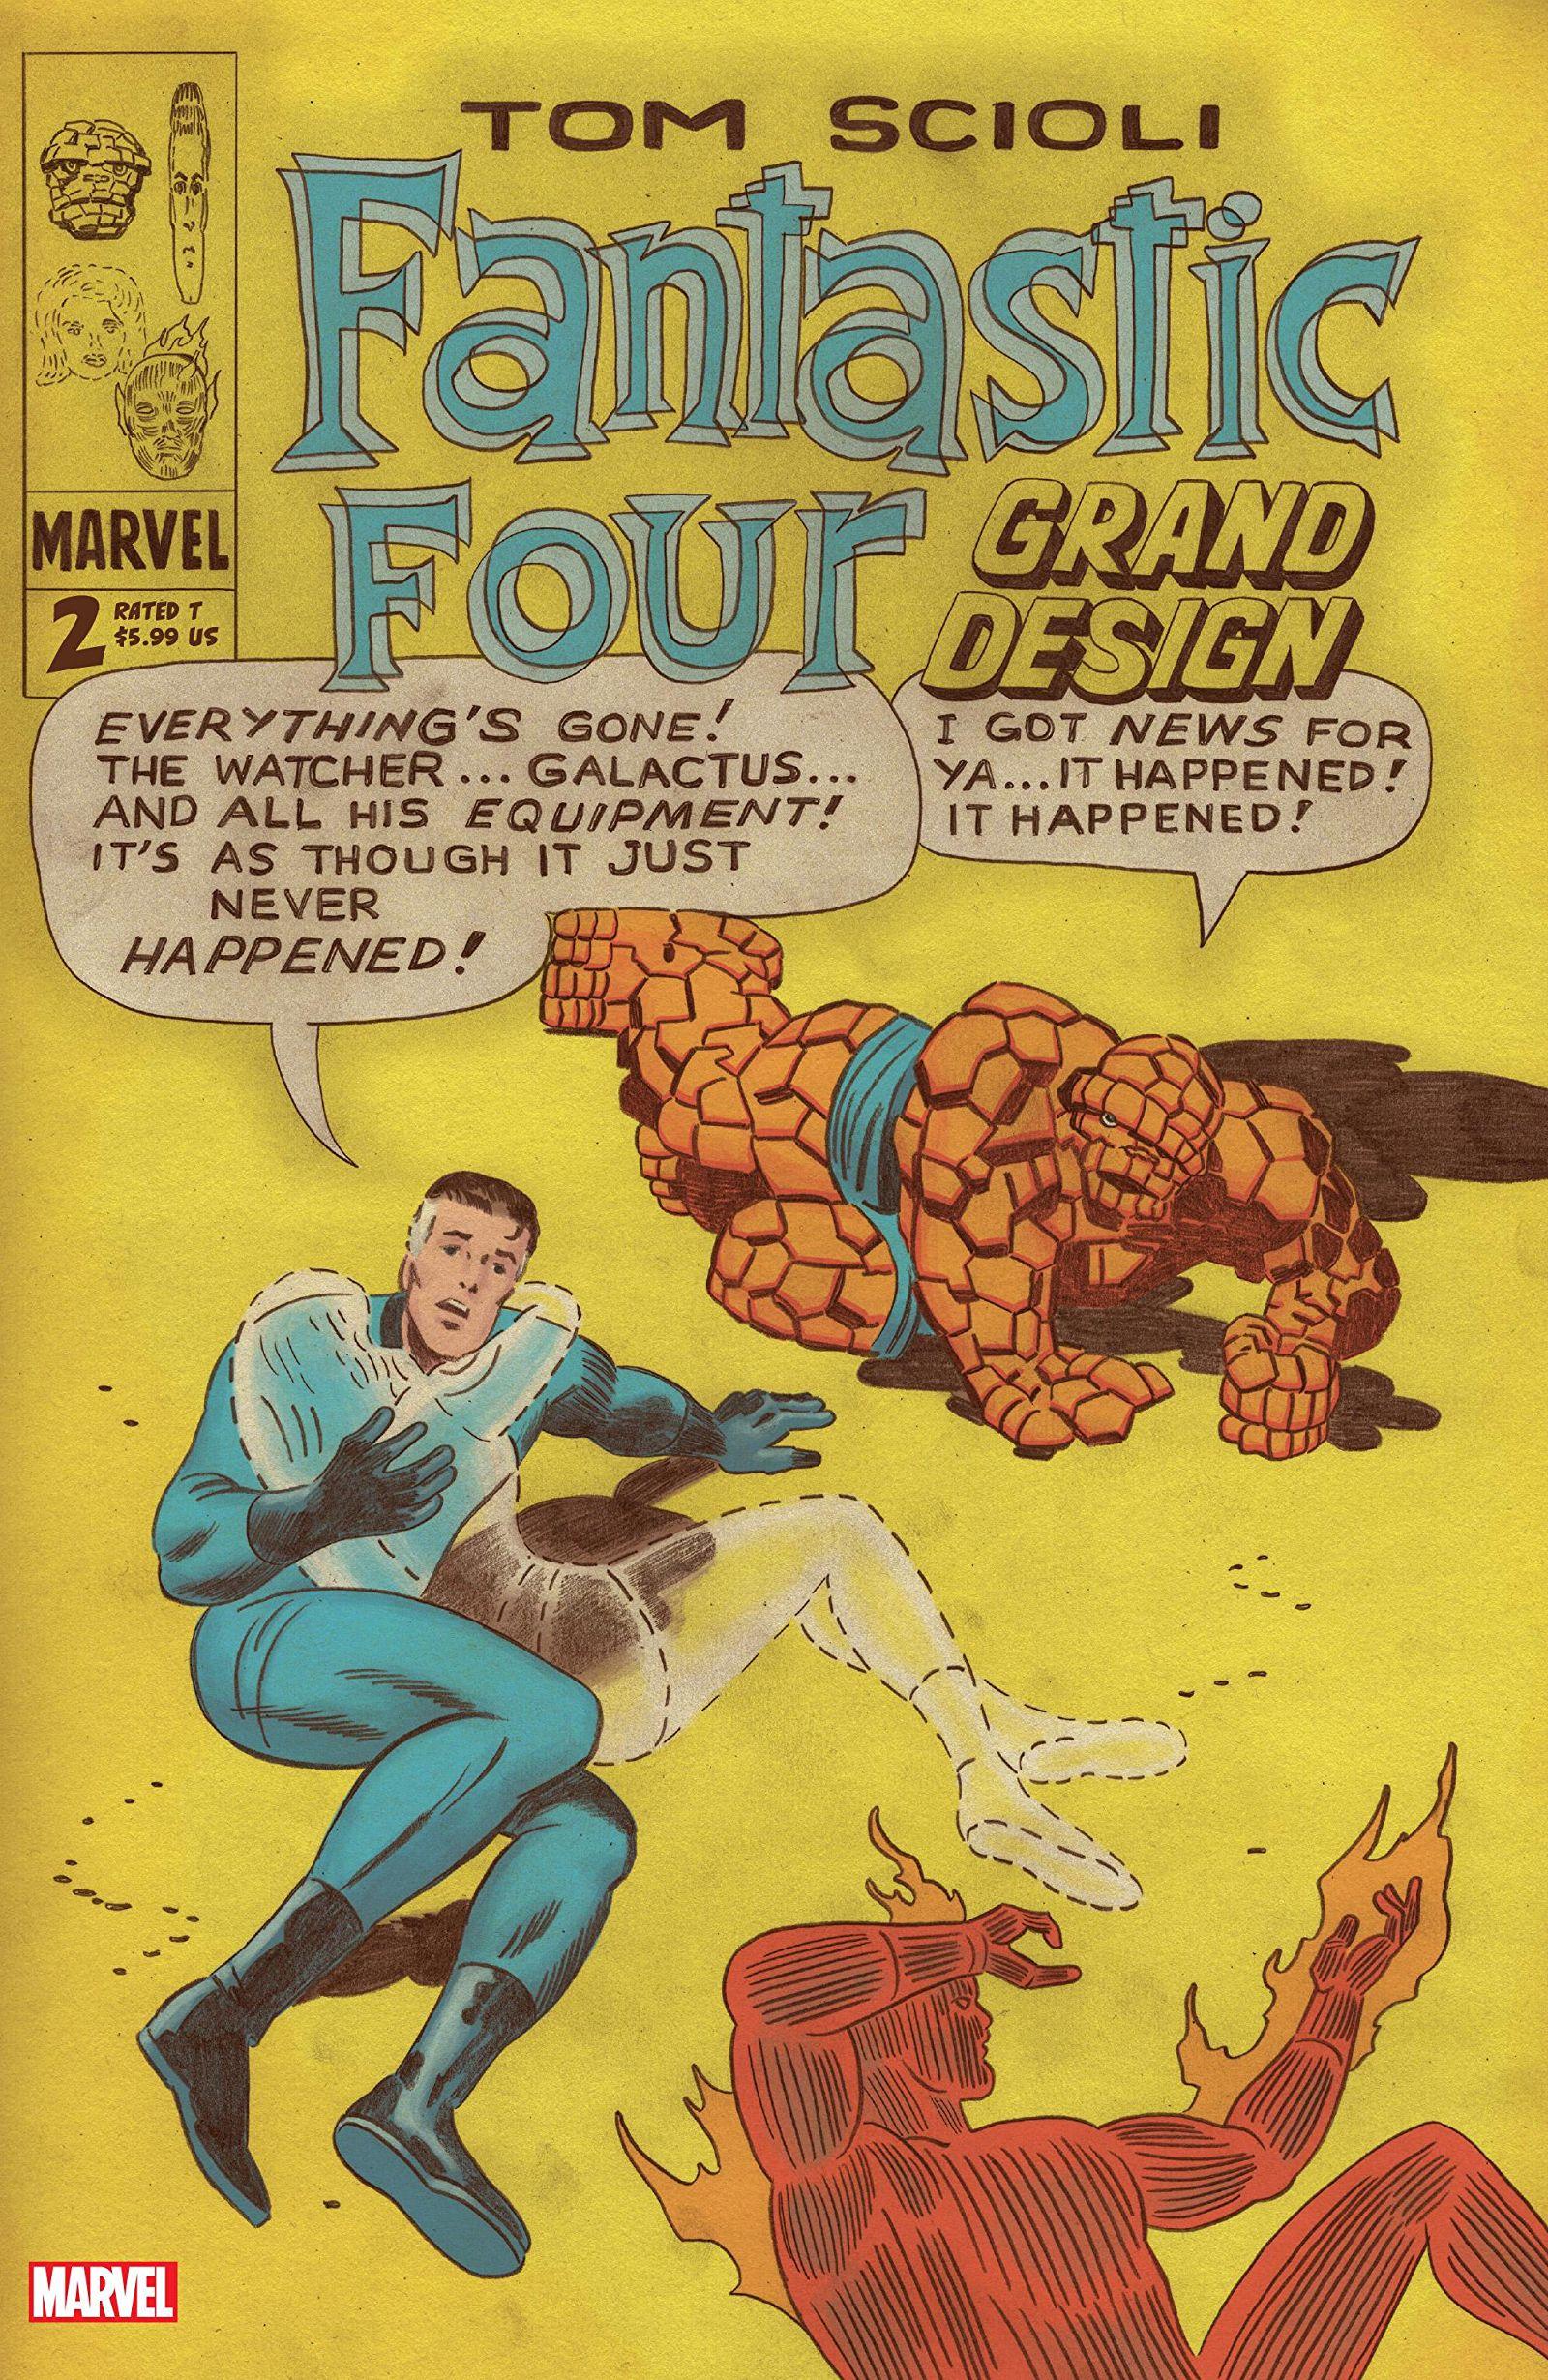 Fantastic Four: Grand Design Vol. 1 #2